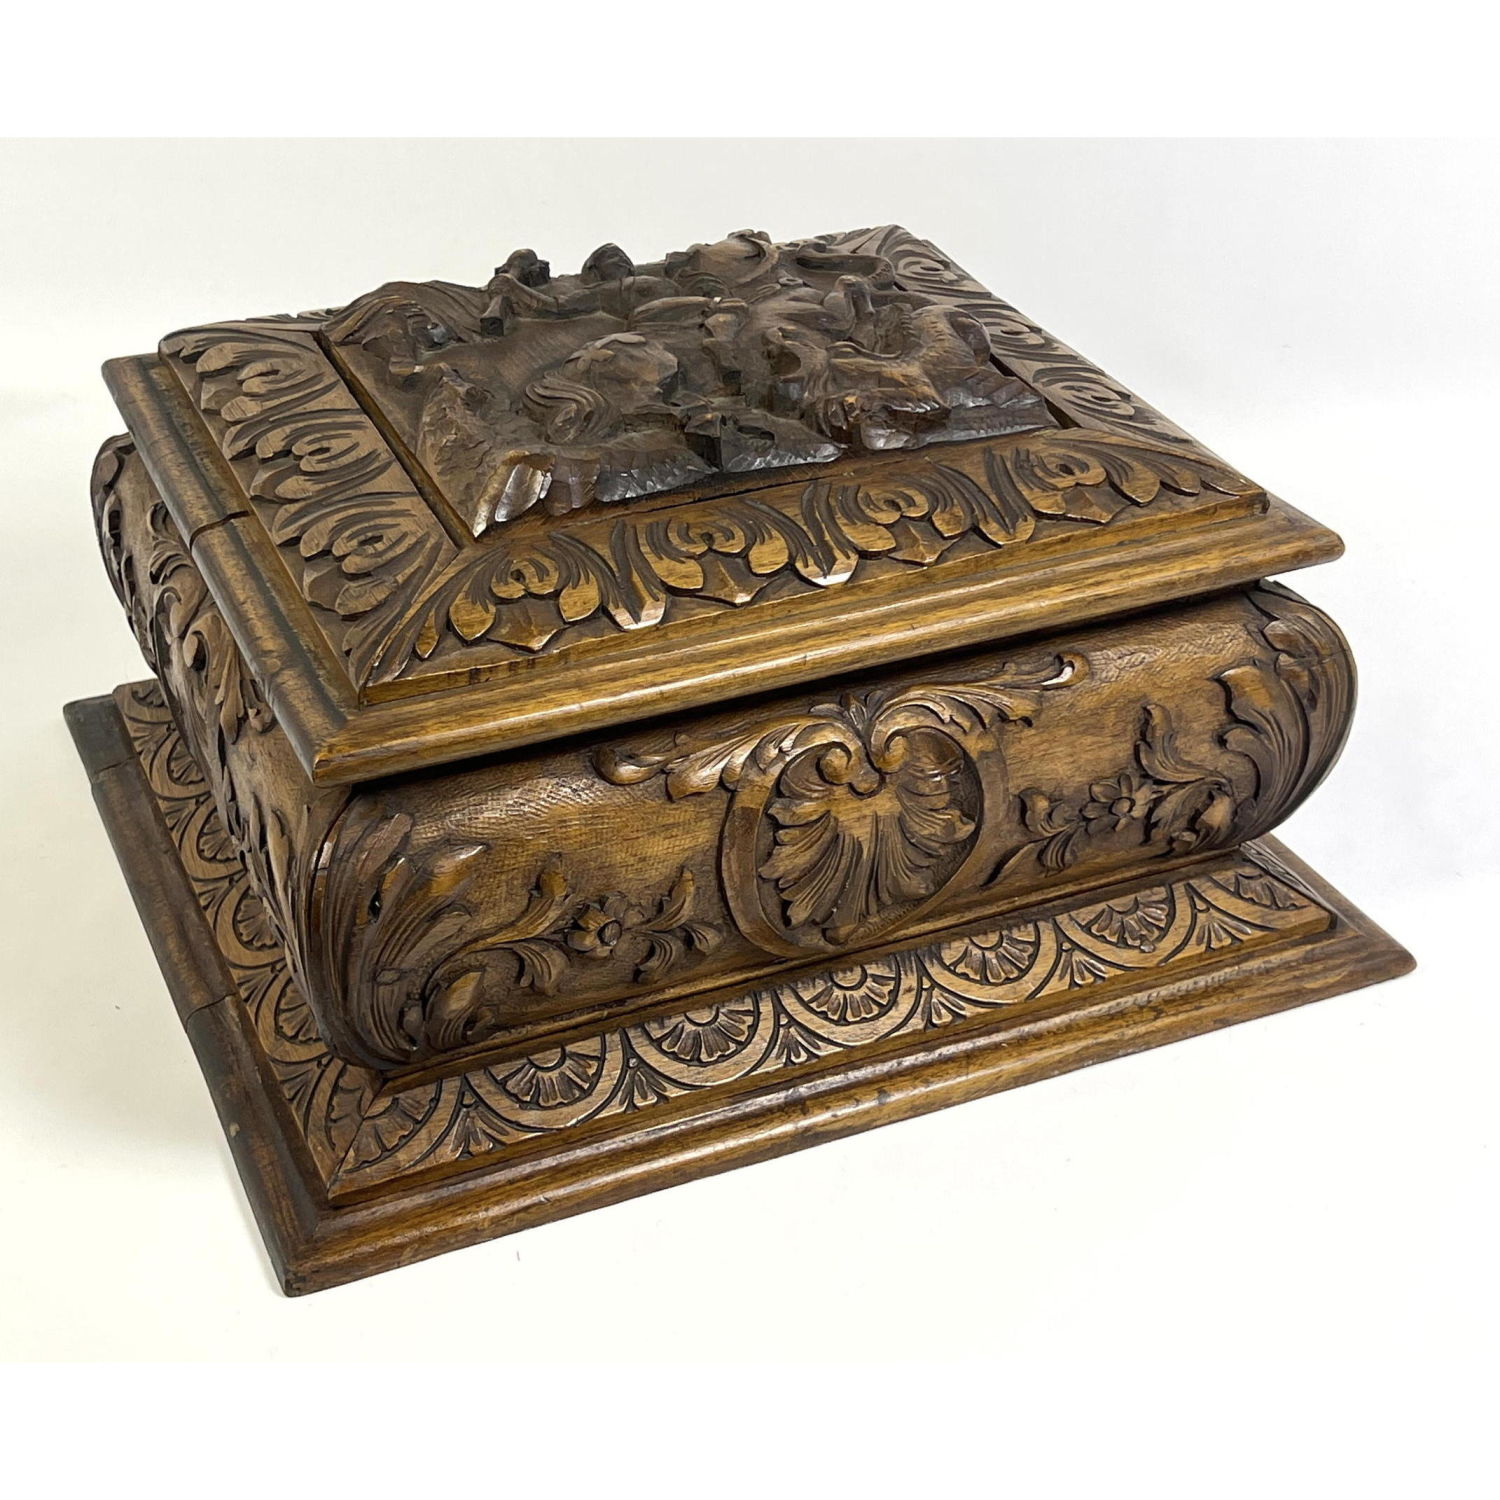 Antique Carved Wood Box. Carved